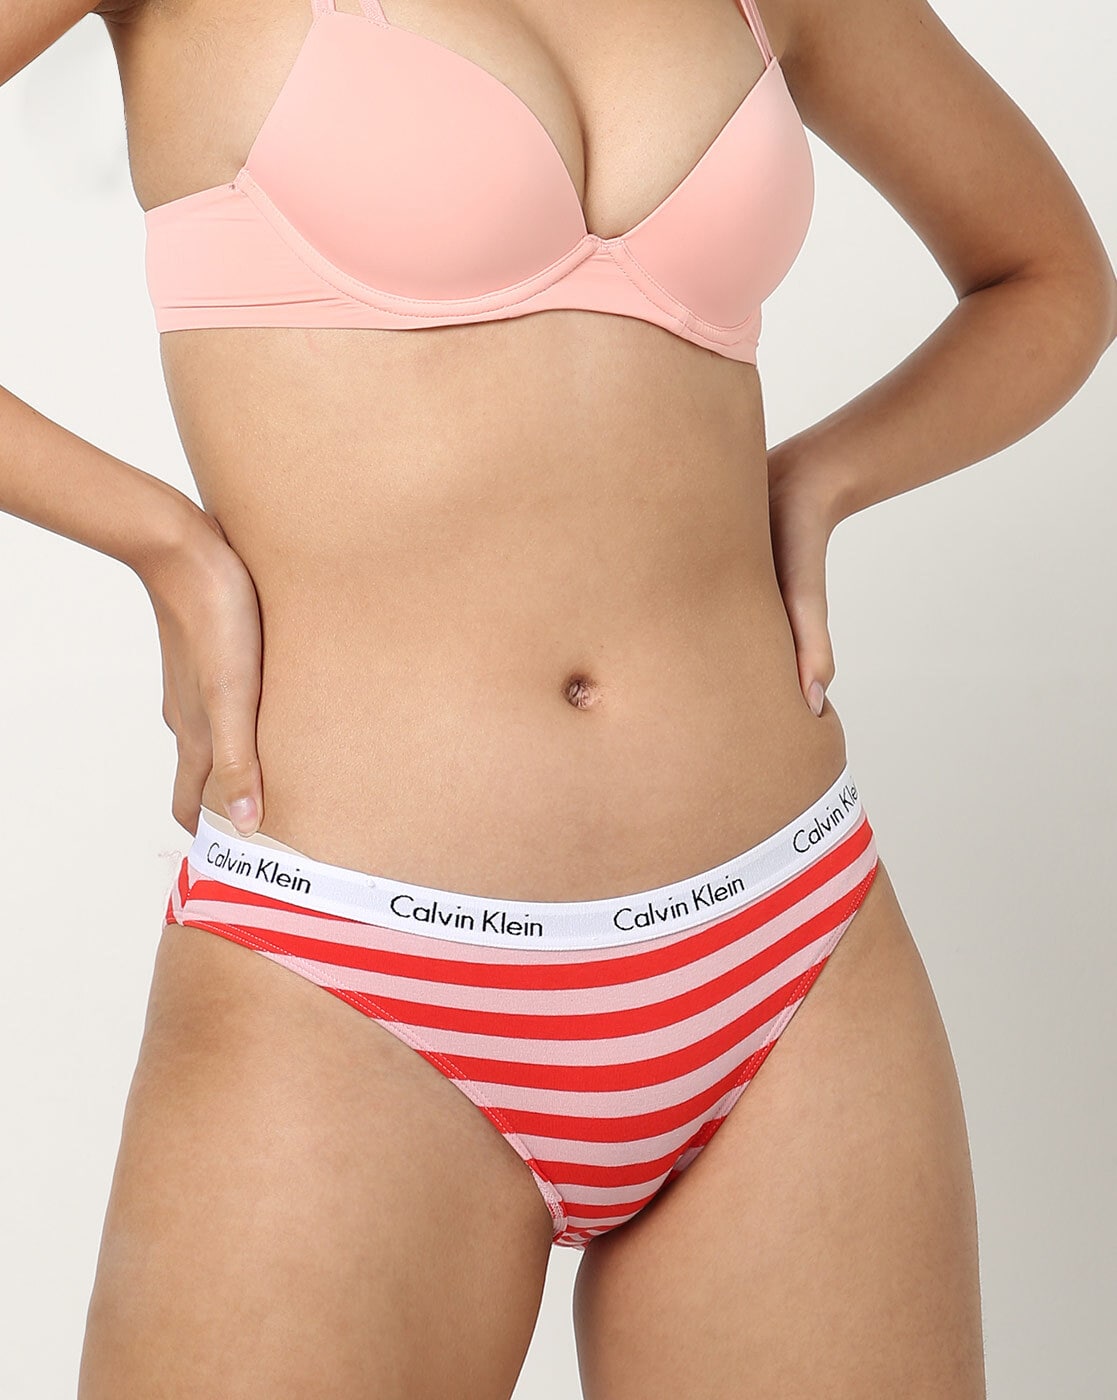 Buy Pink Panties for Women by Calvin Klein Underwear Online 